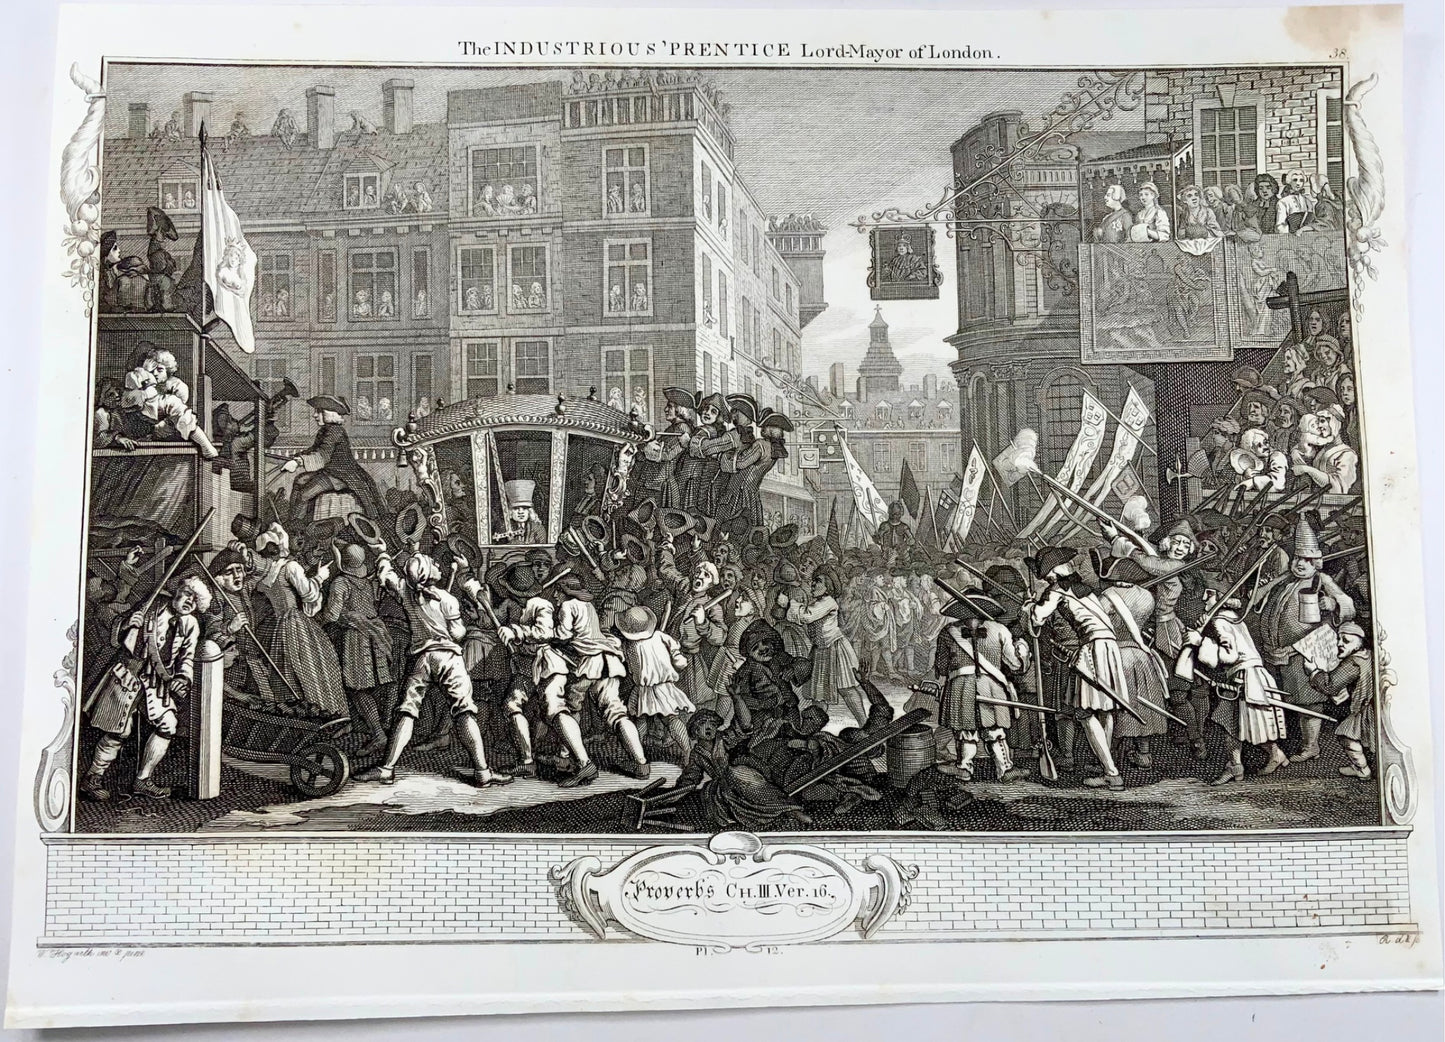 1790 c Hogarth del, Riepenhausen sc., L'apprenti industrieux, lord-maire